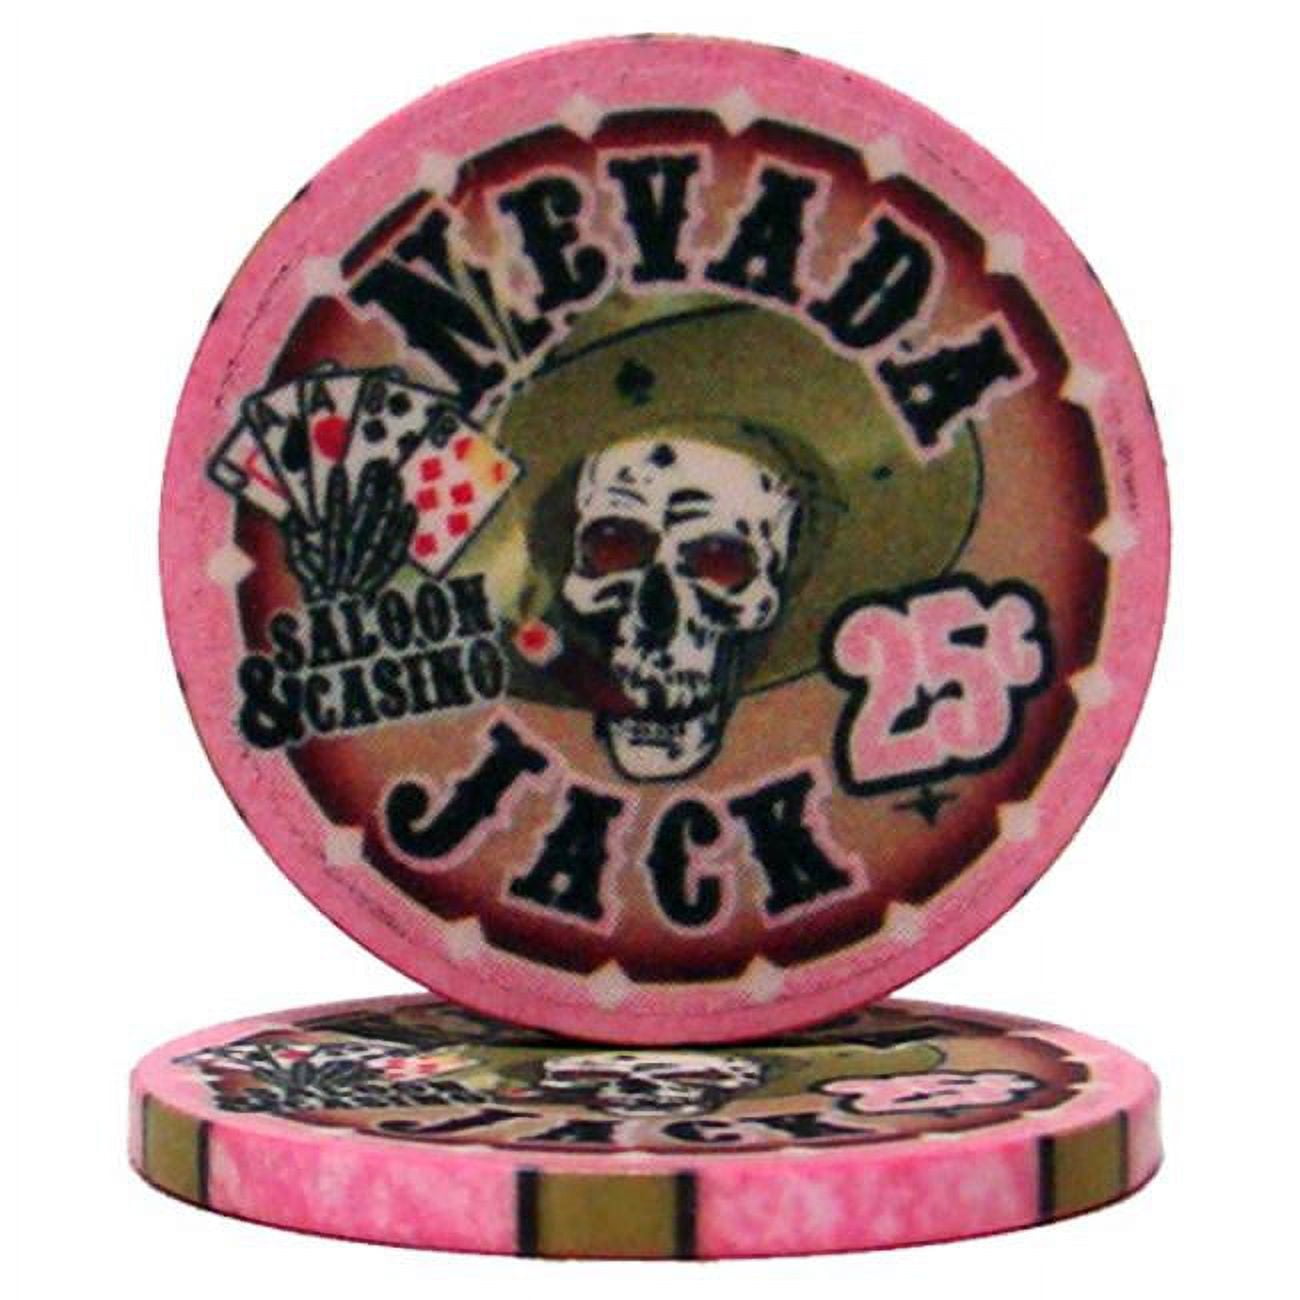 Brybelly Holdings CPNJ-25c-25 10 g 25 Cent Nevada Jack Ceramic Poker Chip - Roll of 25